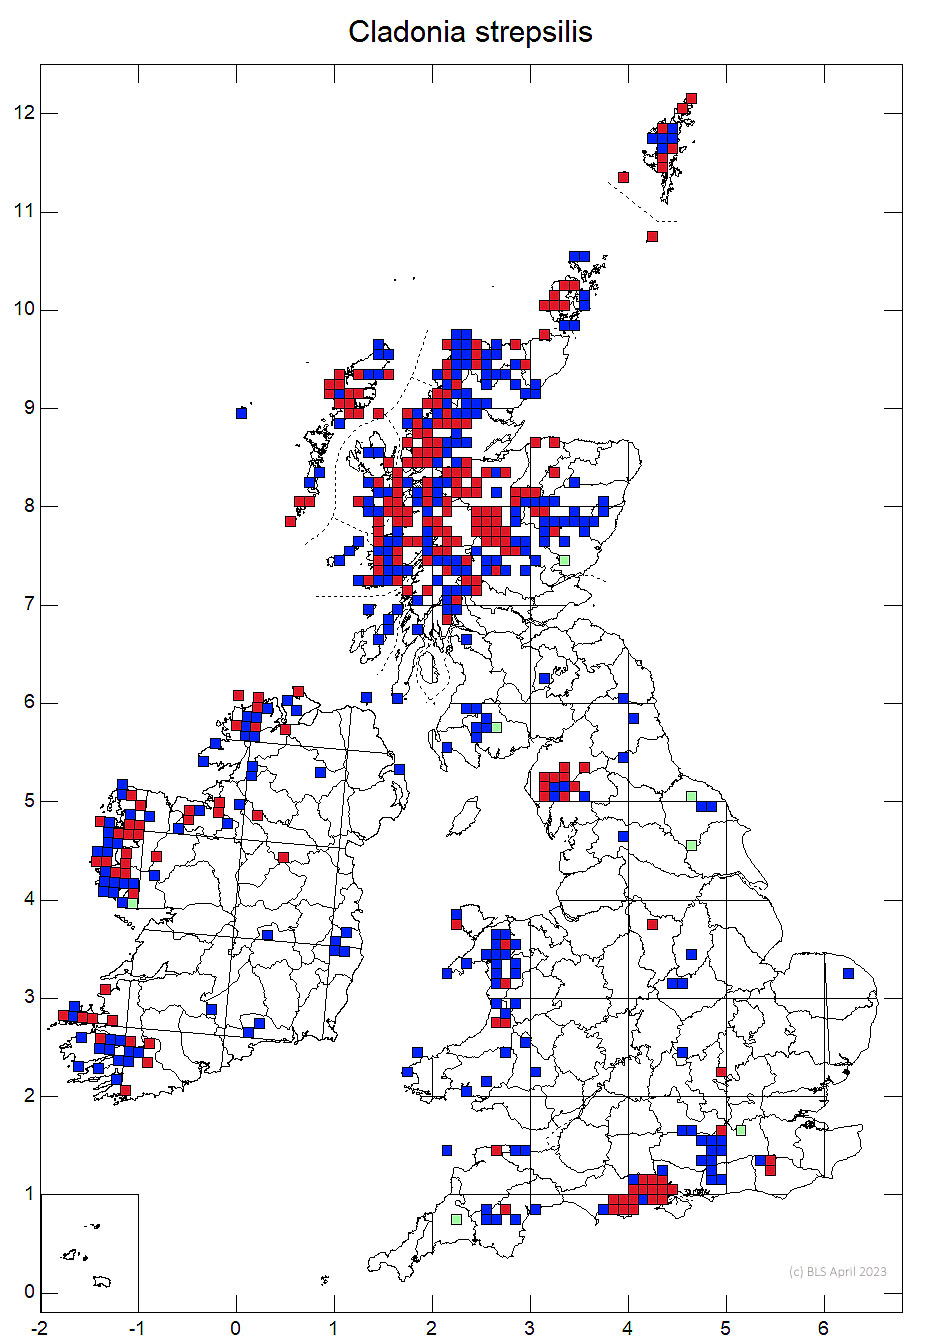 Cladonia strepsilis 10km sq distribution map